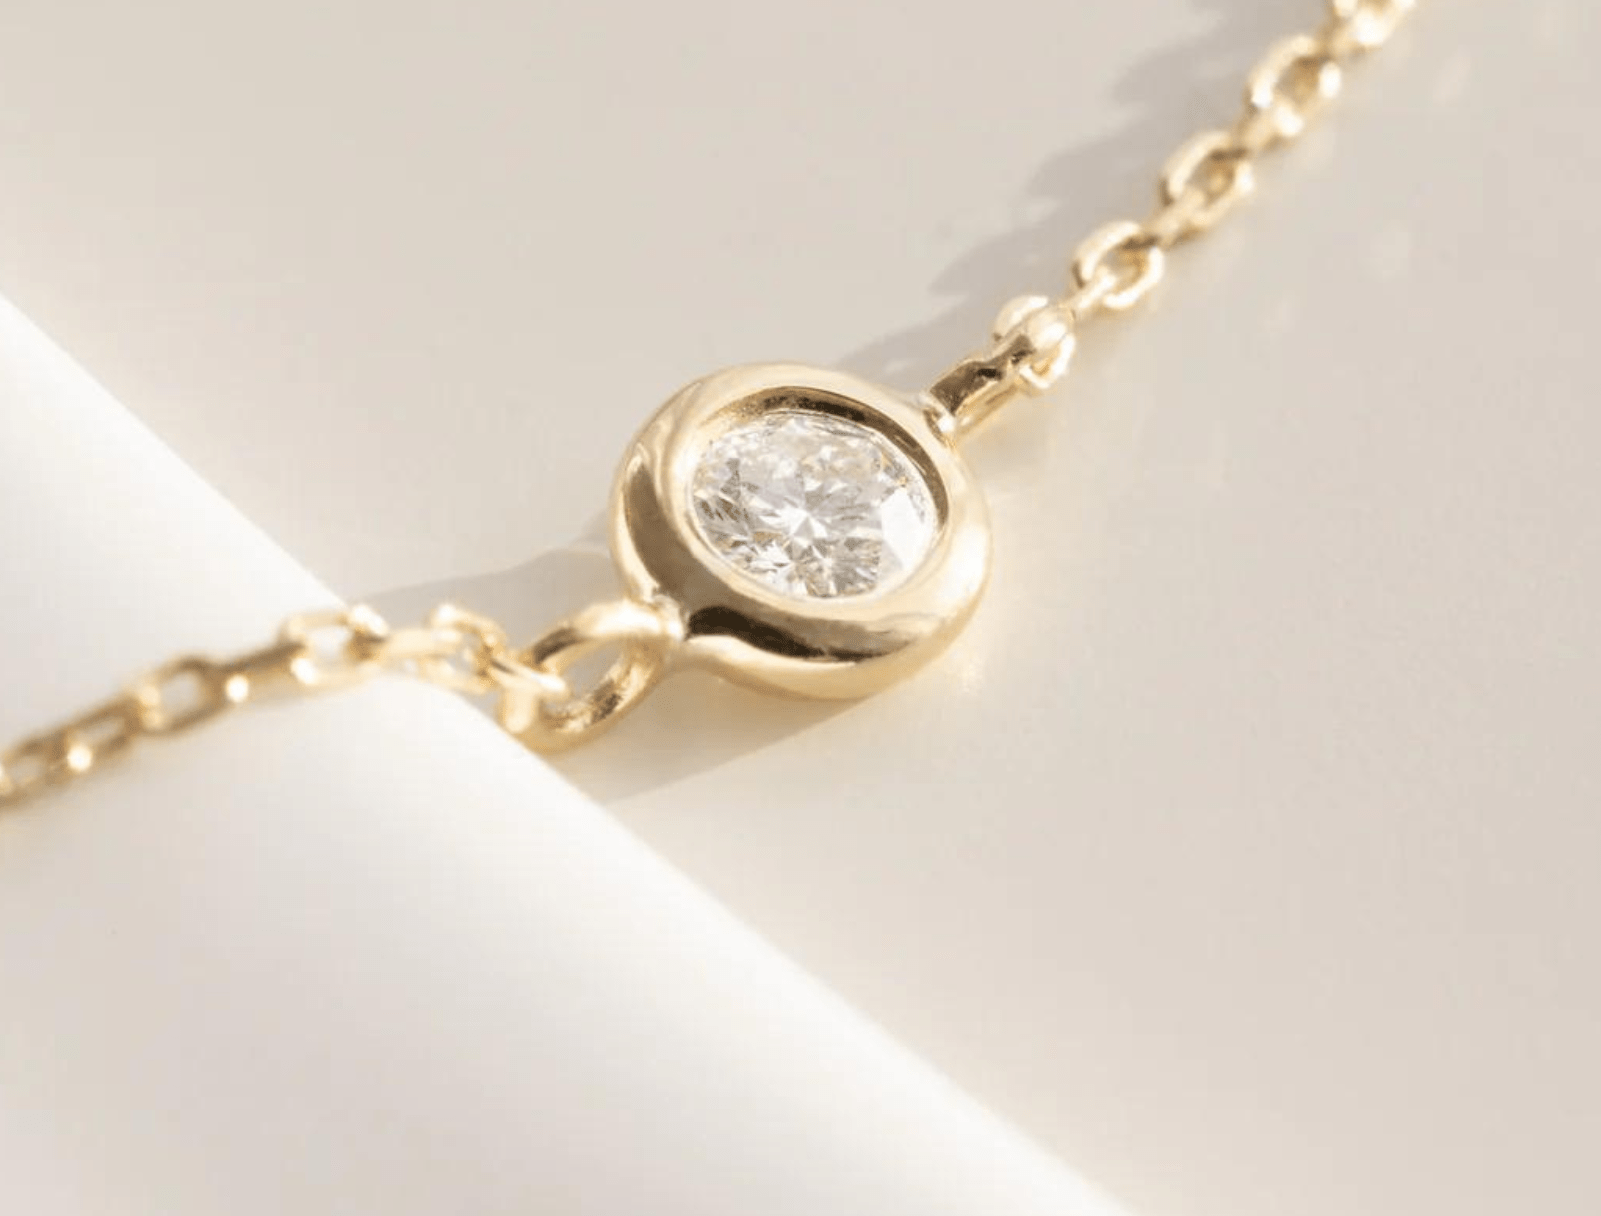 Picture of  Luna Rae solid 9k gold Diamond Sky Bracelet